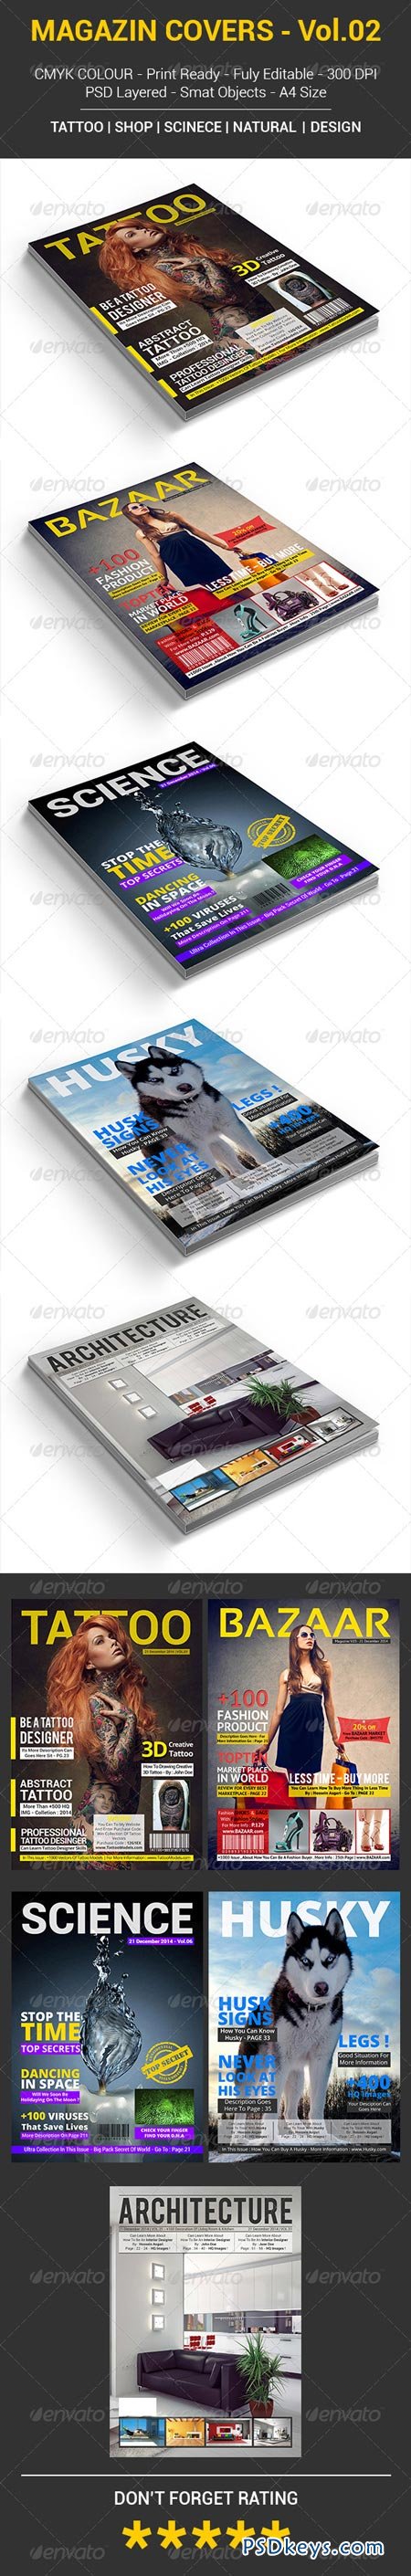 5 Magazine Covers Vol.02 7059773